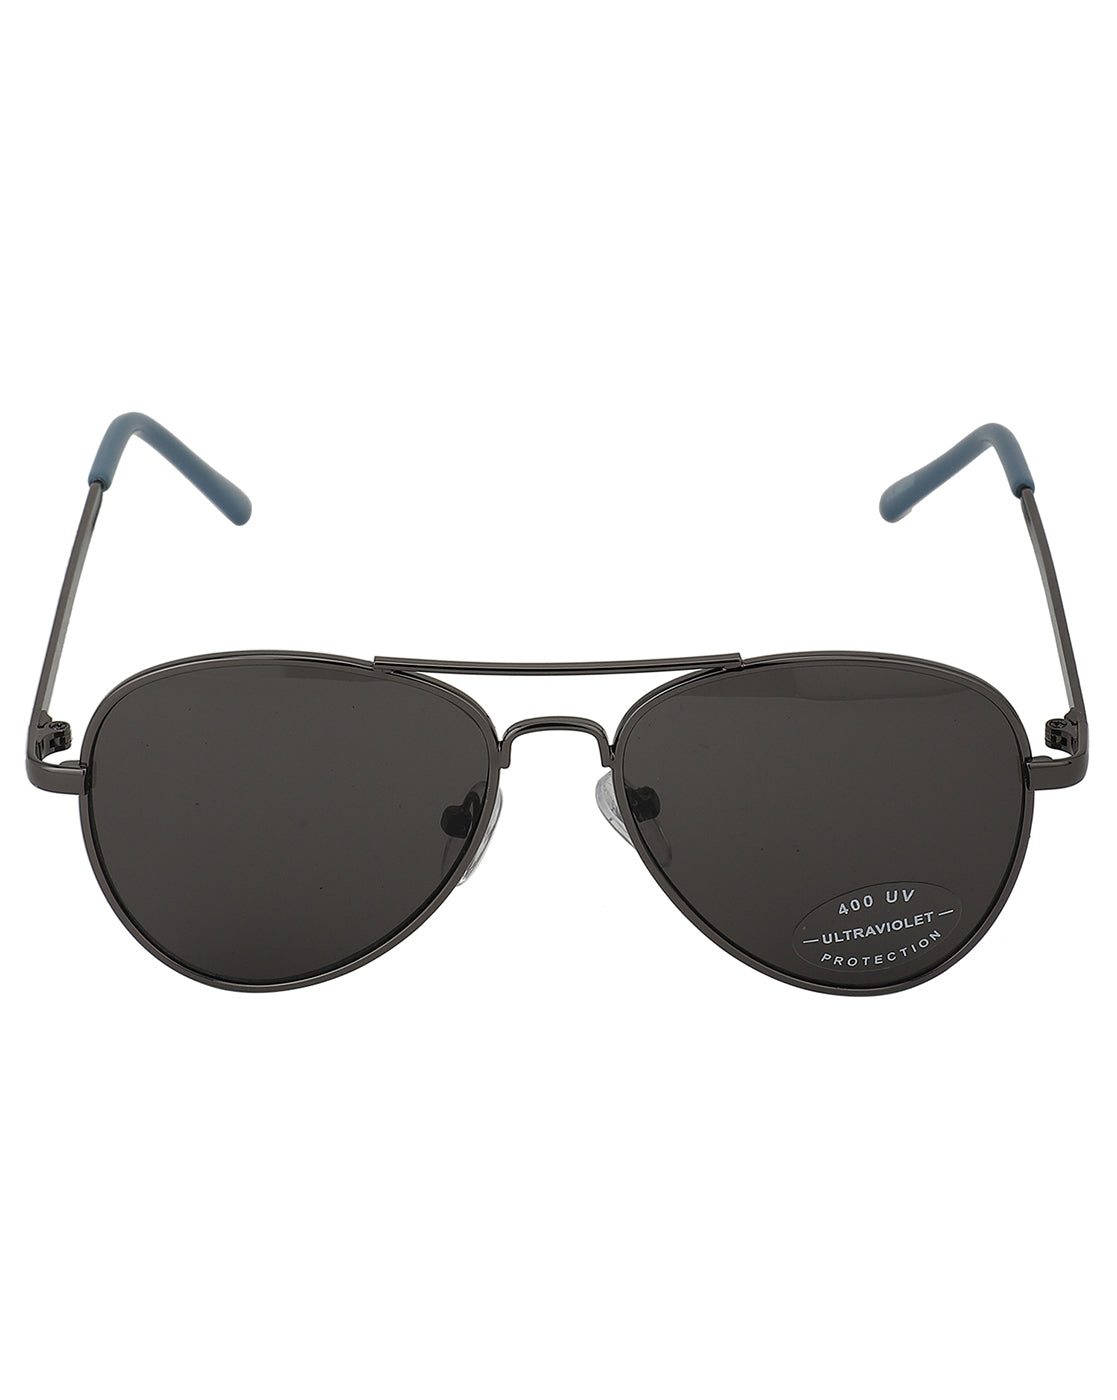 Dark Black Lens Sunglasses Flat Top Square Oversized Mob Style | eBay